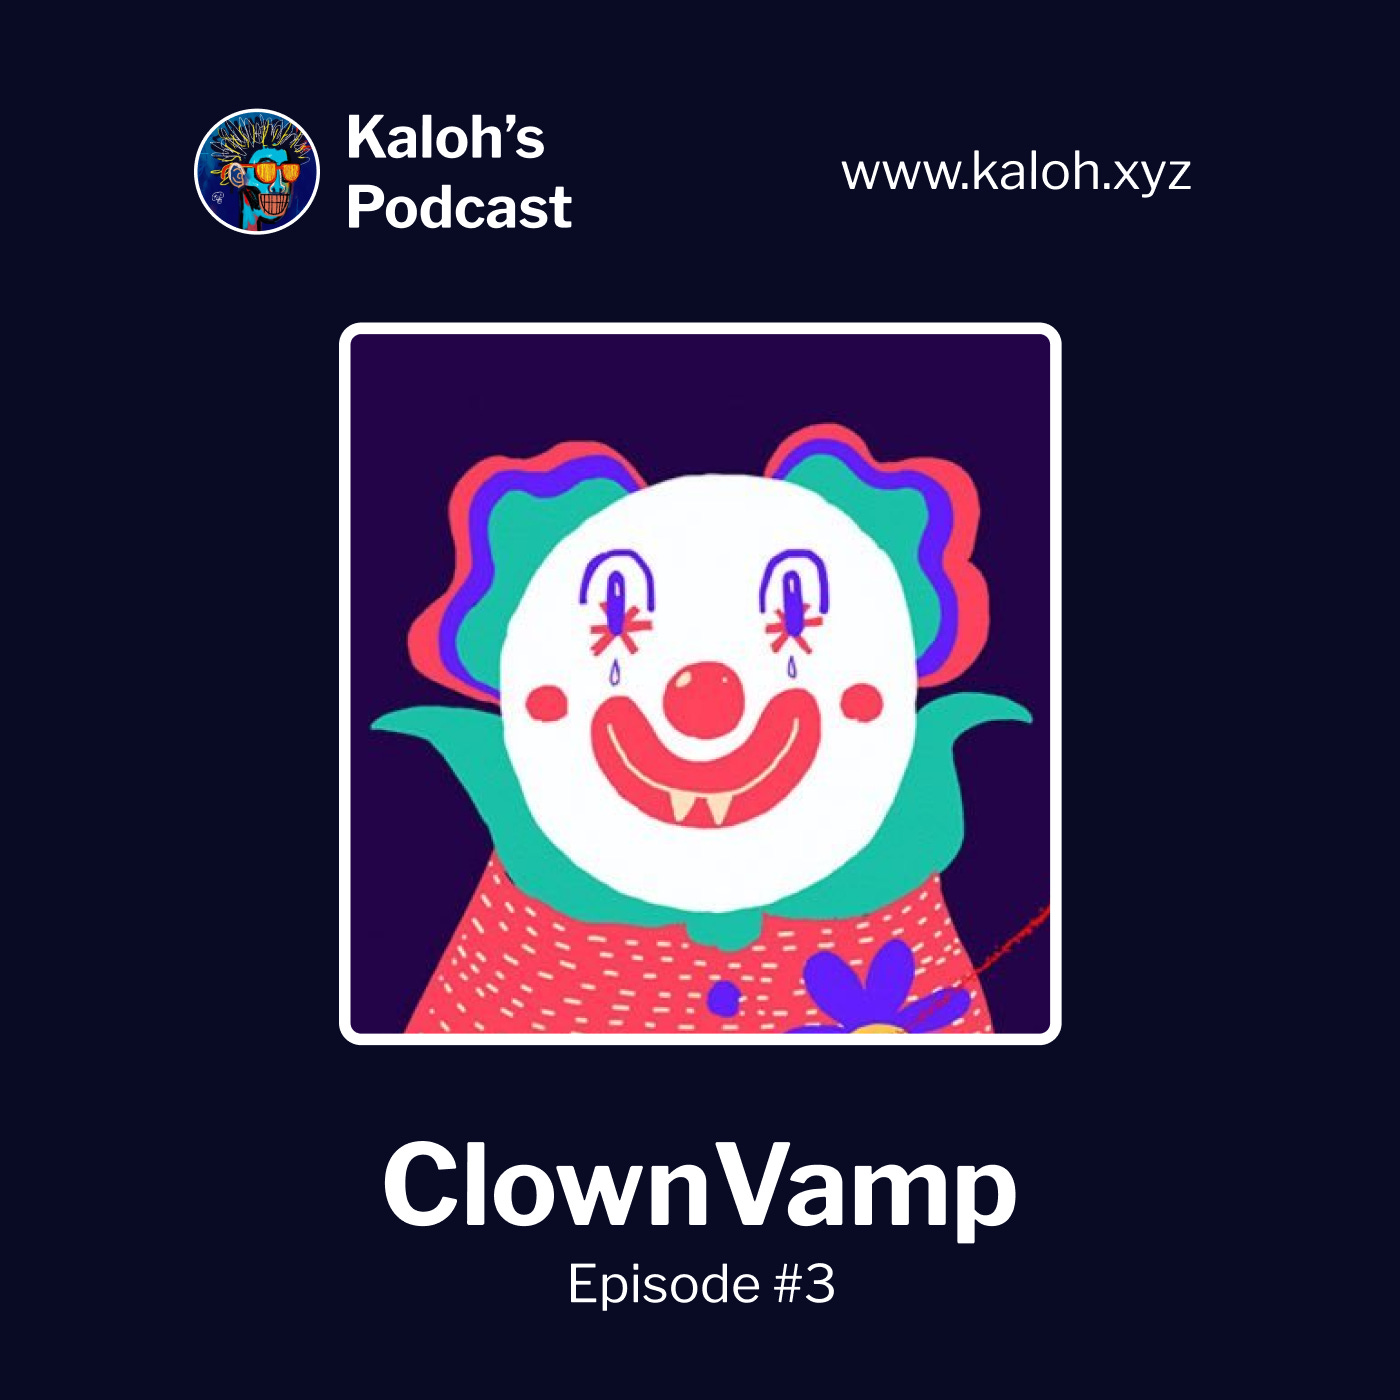 Kaloh’s Podcast Episode #3: ClownVamp.Kaloh’s Podcast Episode #3: ClownVamp.